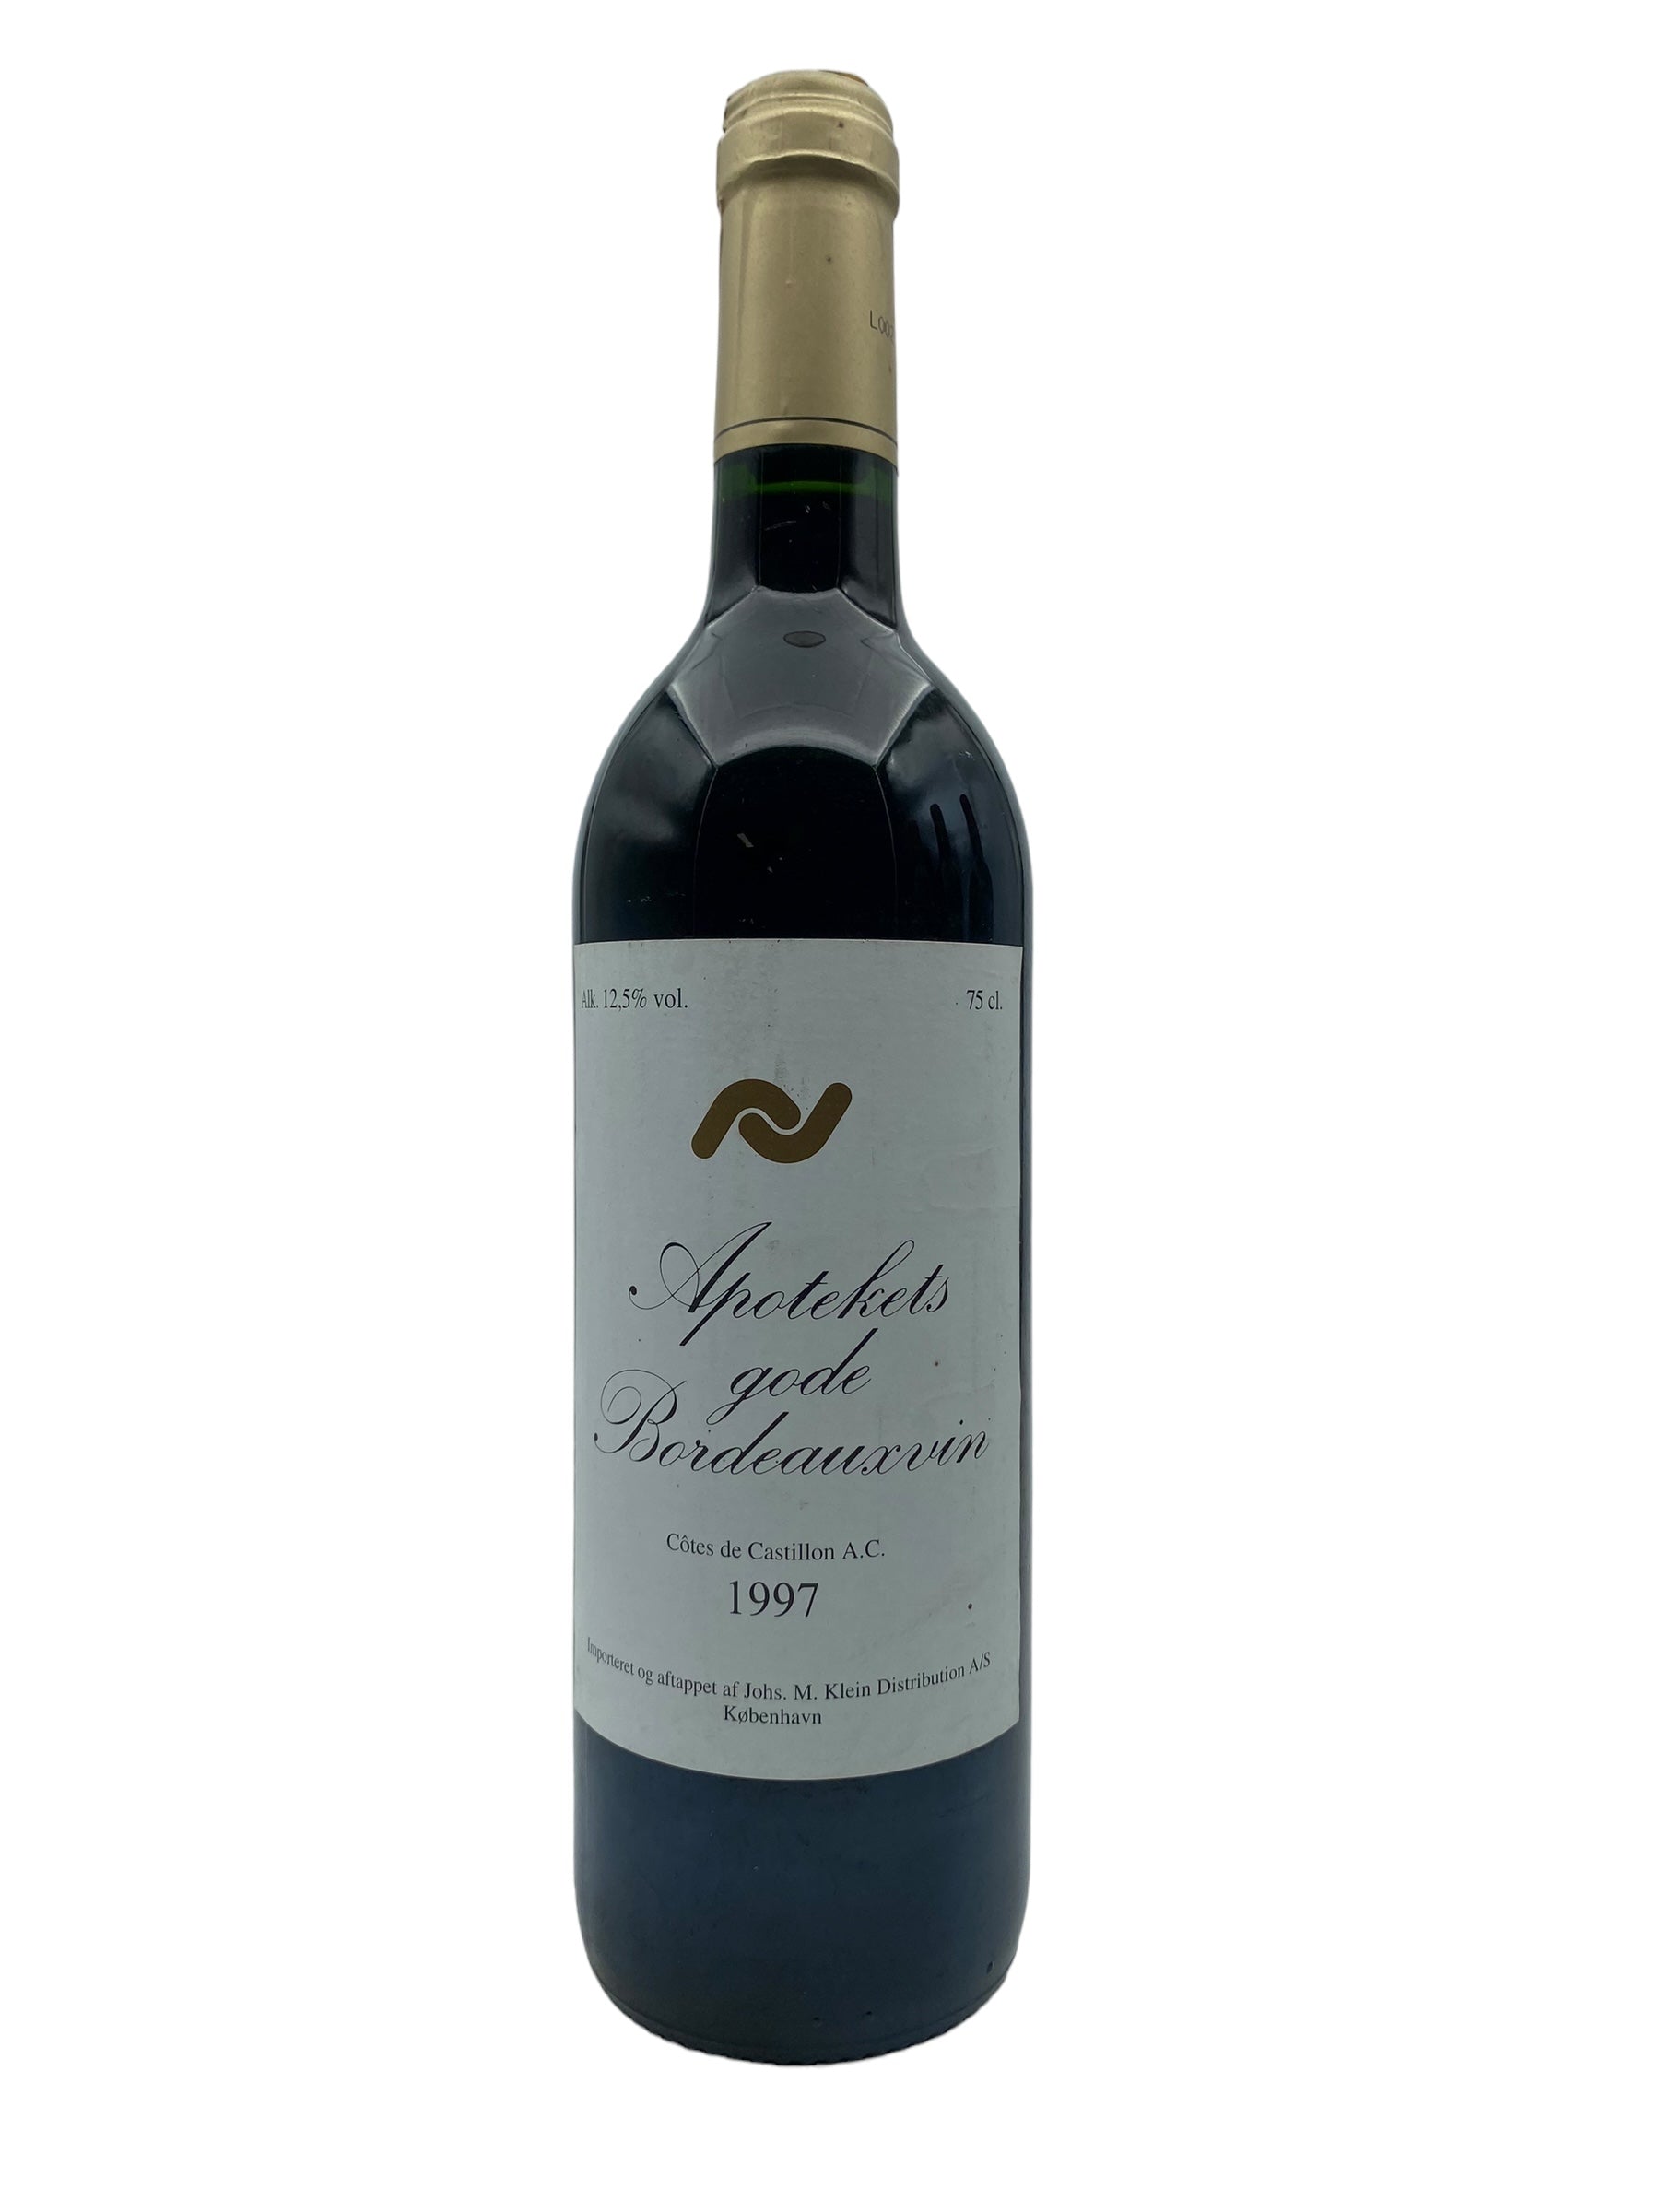 Se Apotekets gode Bordeauxvin 1997 Cotes du Castillon hos Bottleswithhistory.dk